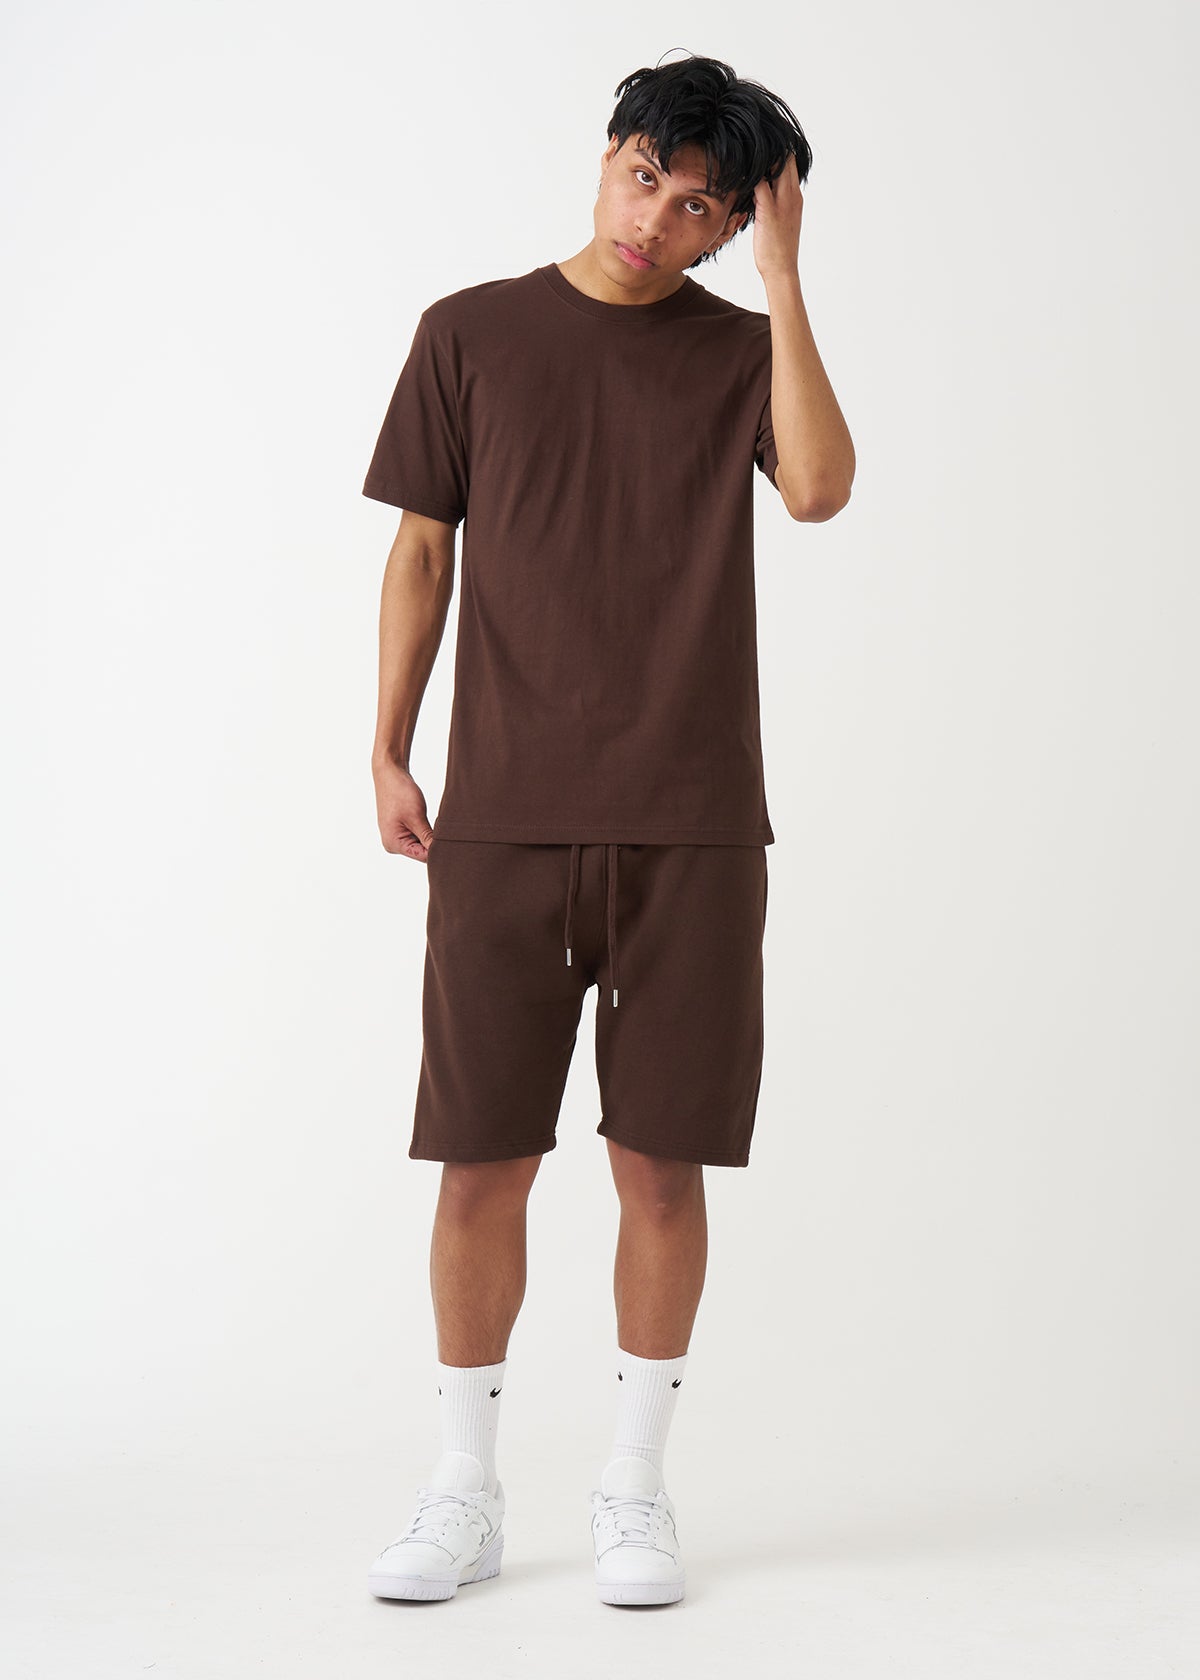 Brown T-Shirt And Short Set